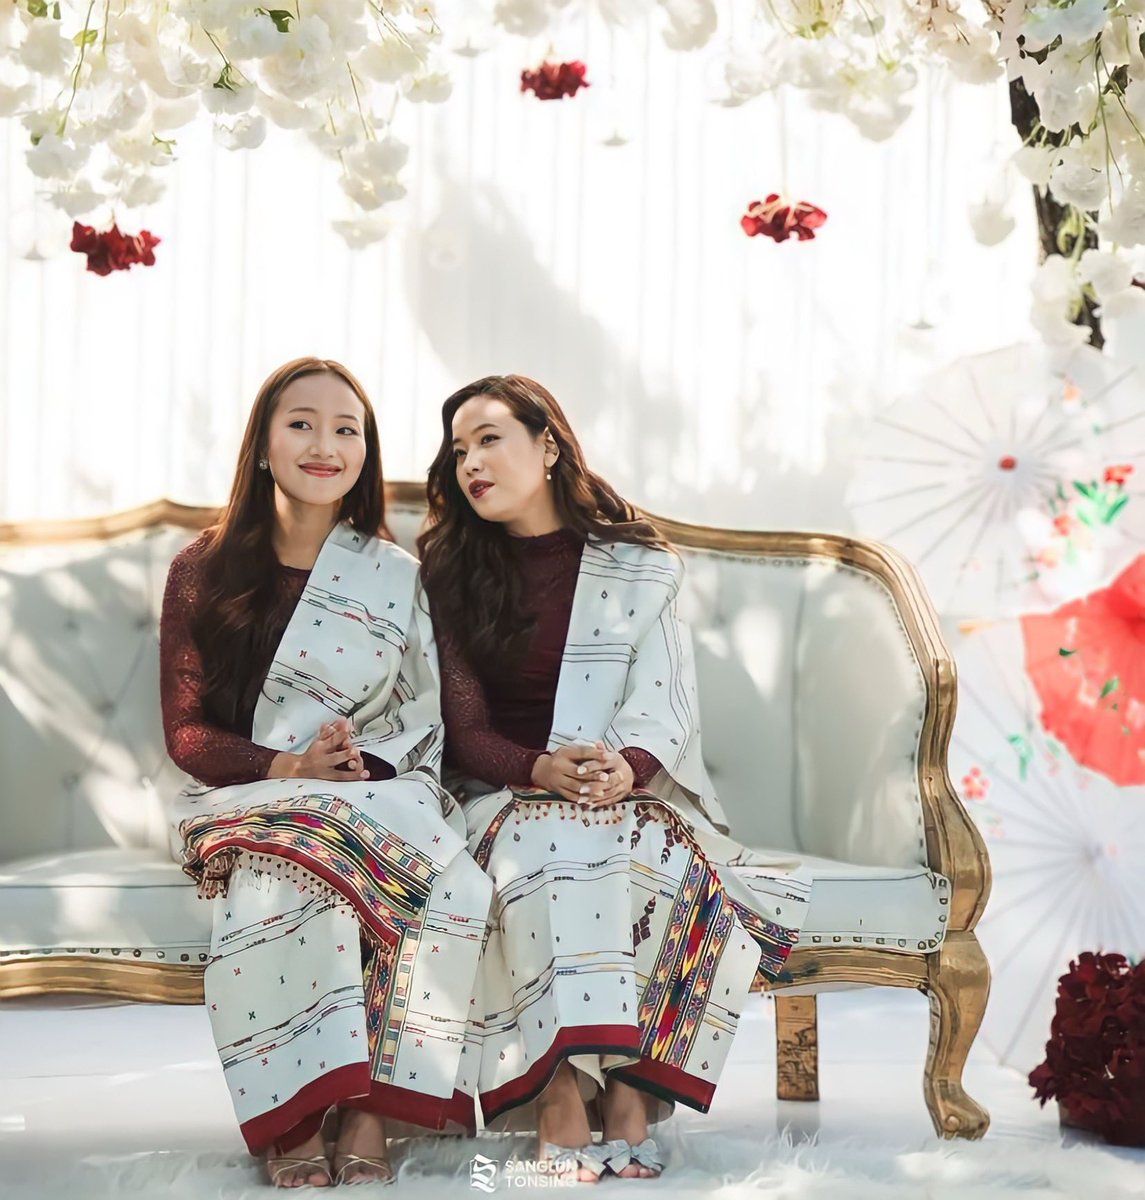 Bride and her bridesmaid 

Bride: @dr_sylnunmawi_7_md 
Bridesmaid: @oliviamunluo  

#bride #bridedress #indianbride #bridalshower #bridesmaid #bridesmaiddress #sendoff #sendoffdress #sendoffparty #wedding #weddingphotography #marriage #chikim #beingchikim